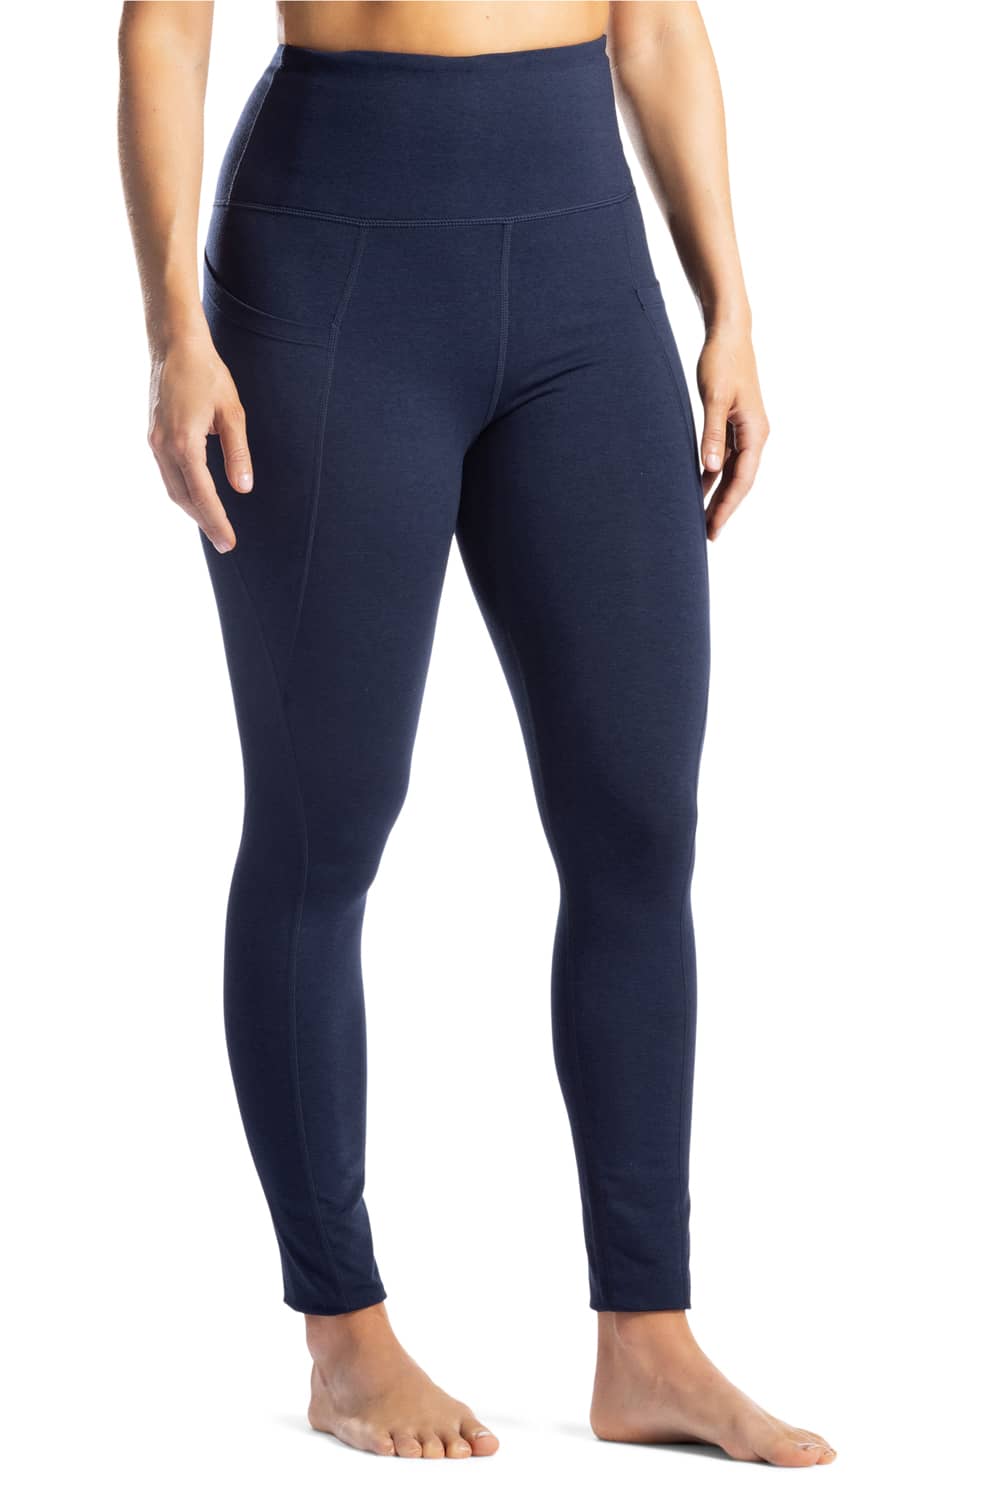 Royal blue capris women gym wear High waist 2 back pockets - Belore Slims